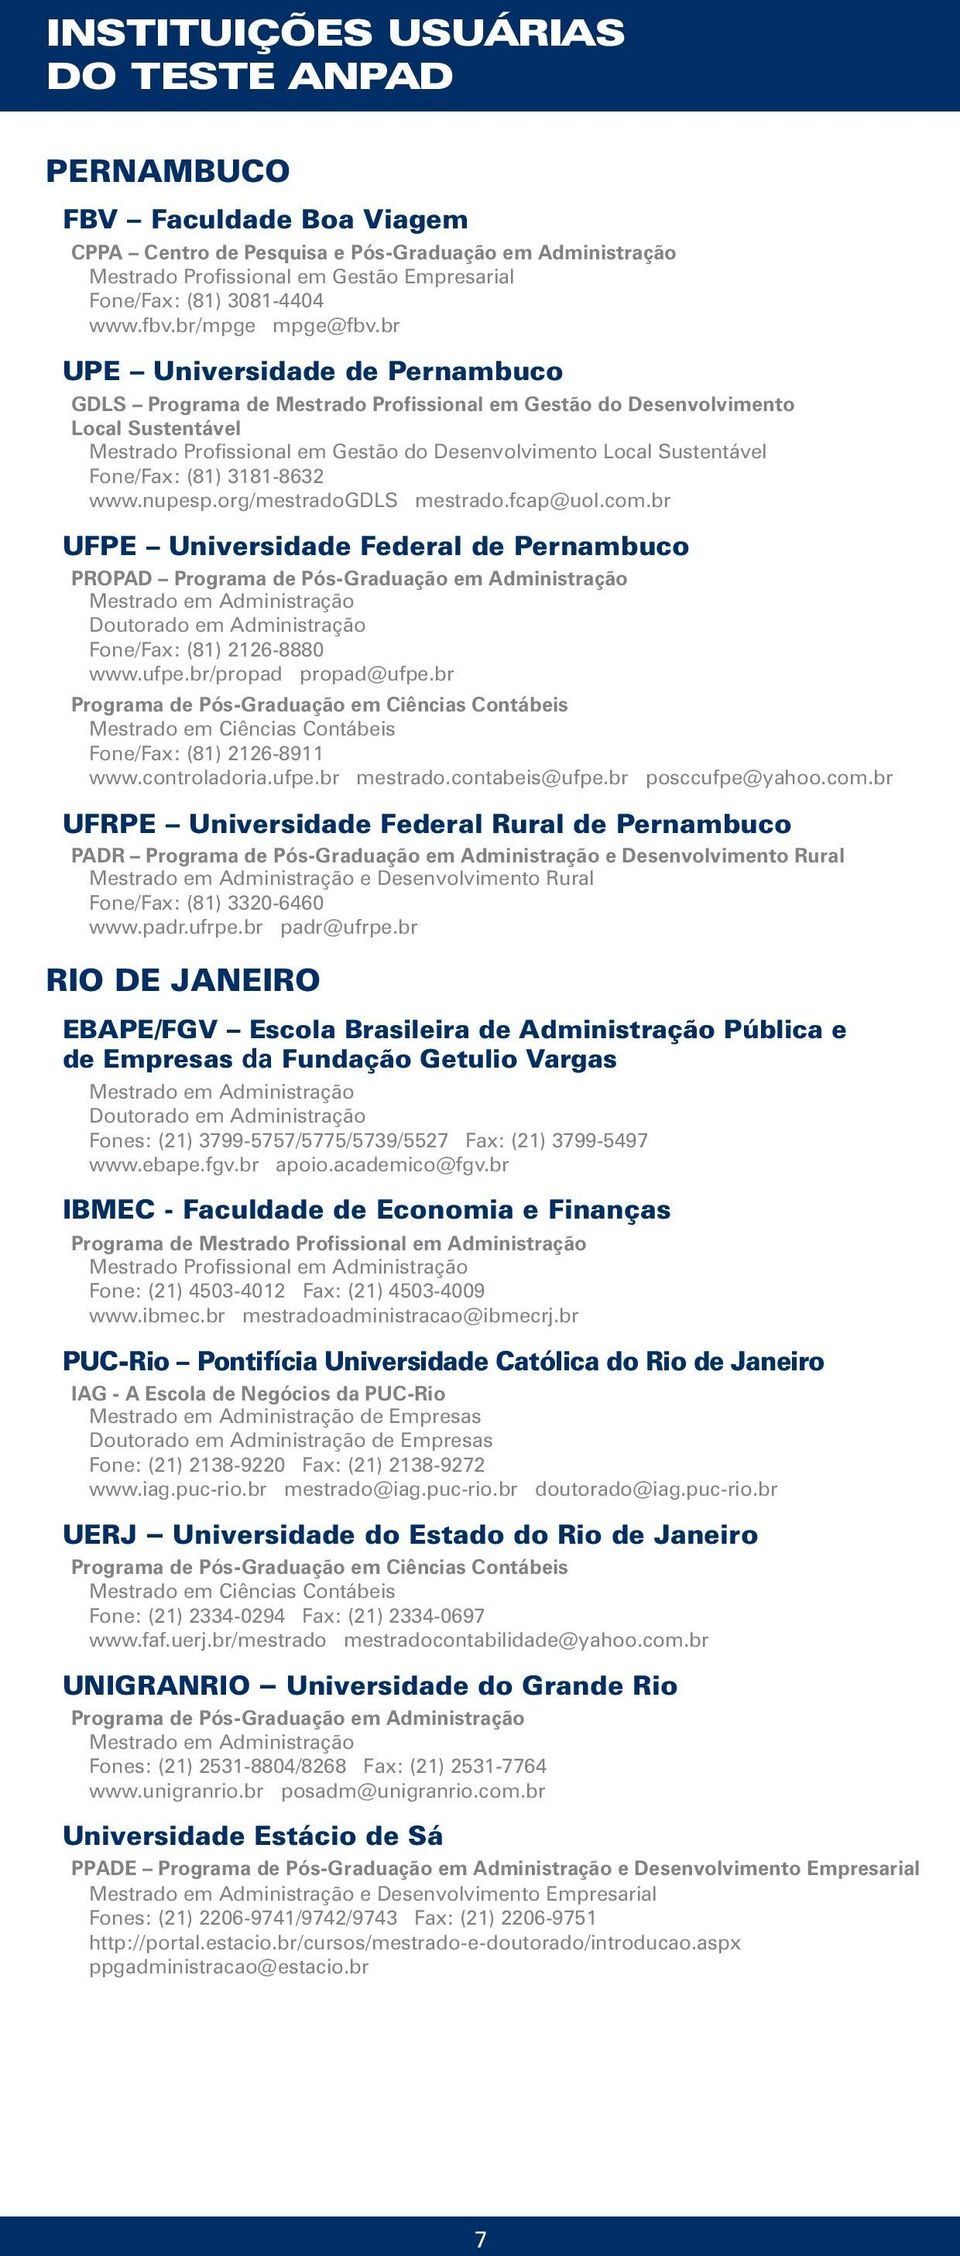 (81) 3181-8632 www.nupesp.org/mestradogdls mestrado.fcap@uol.com.br UFPE Universidade Federal de Pernambuco PROPAD Fone/Fax: (81) 2126-8880 www.ufpe.br/propad propad@ufpe.